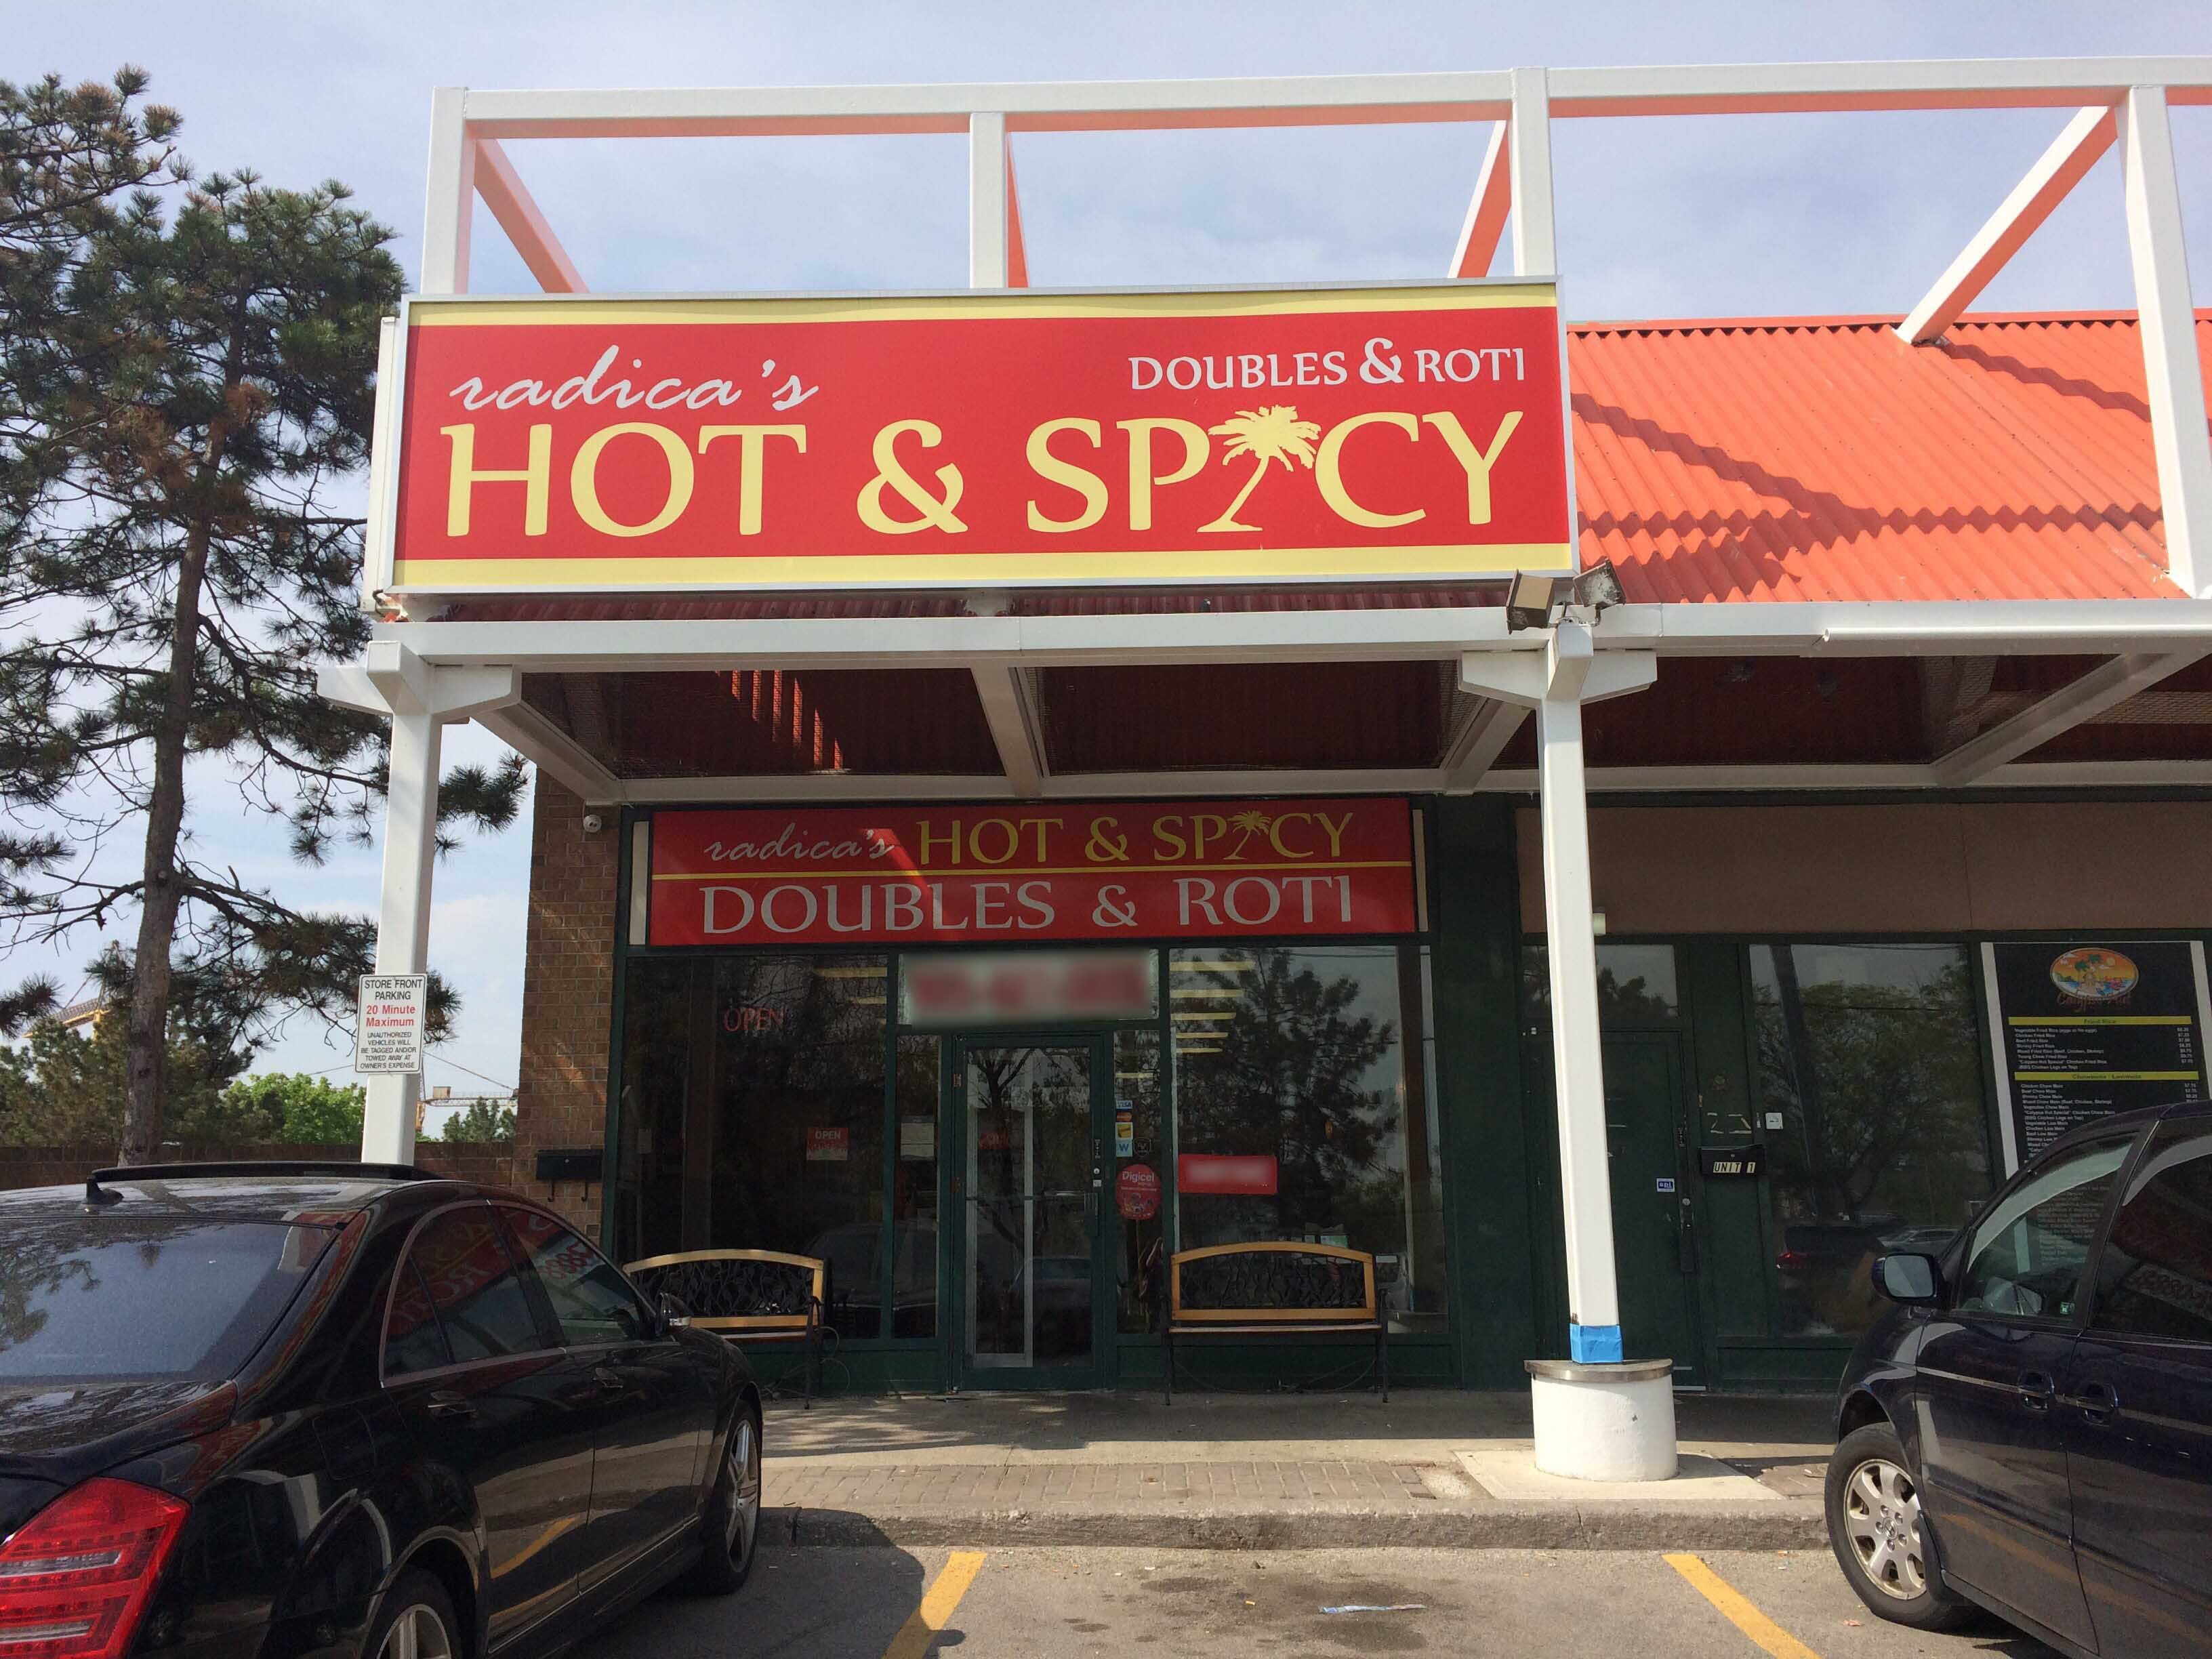 Radica's Hot & Spicy